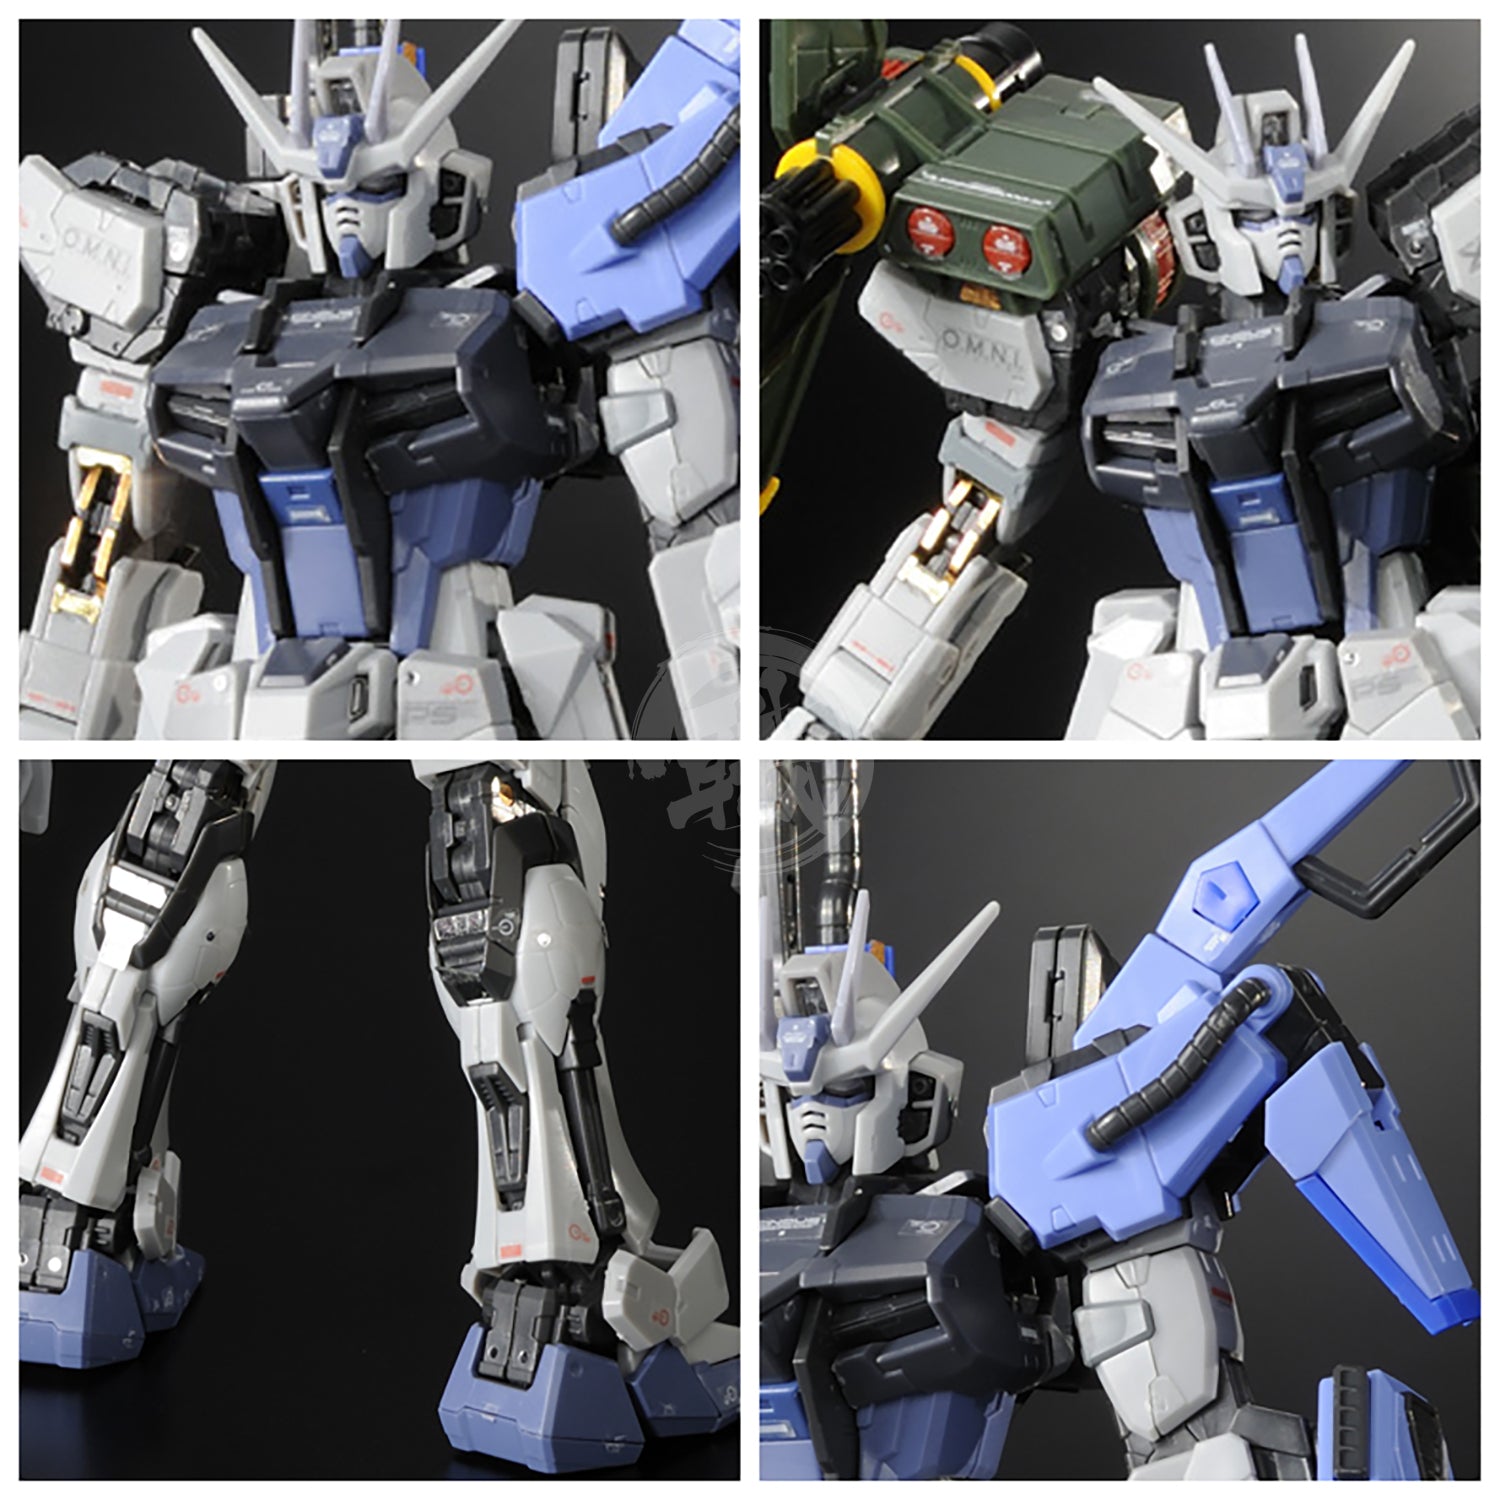 RG Strike Gundam [Deactive Mode]